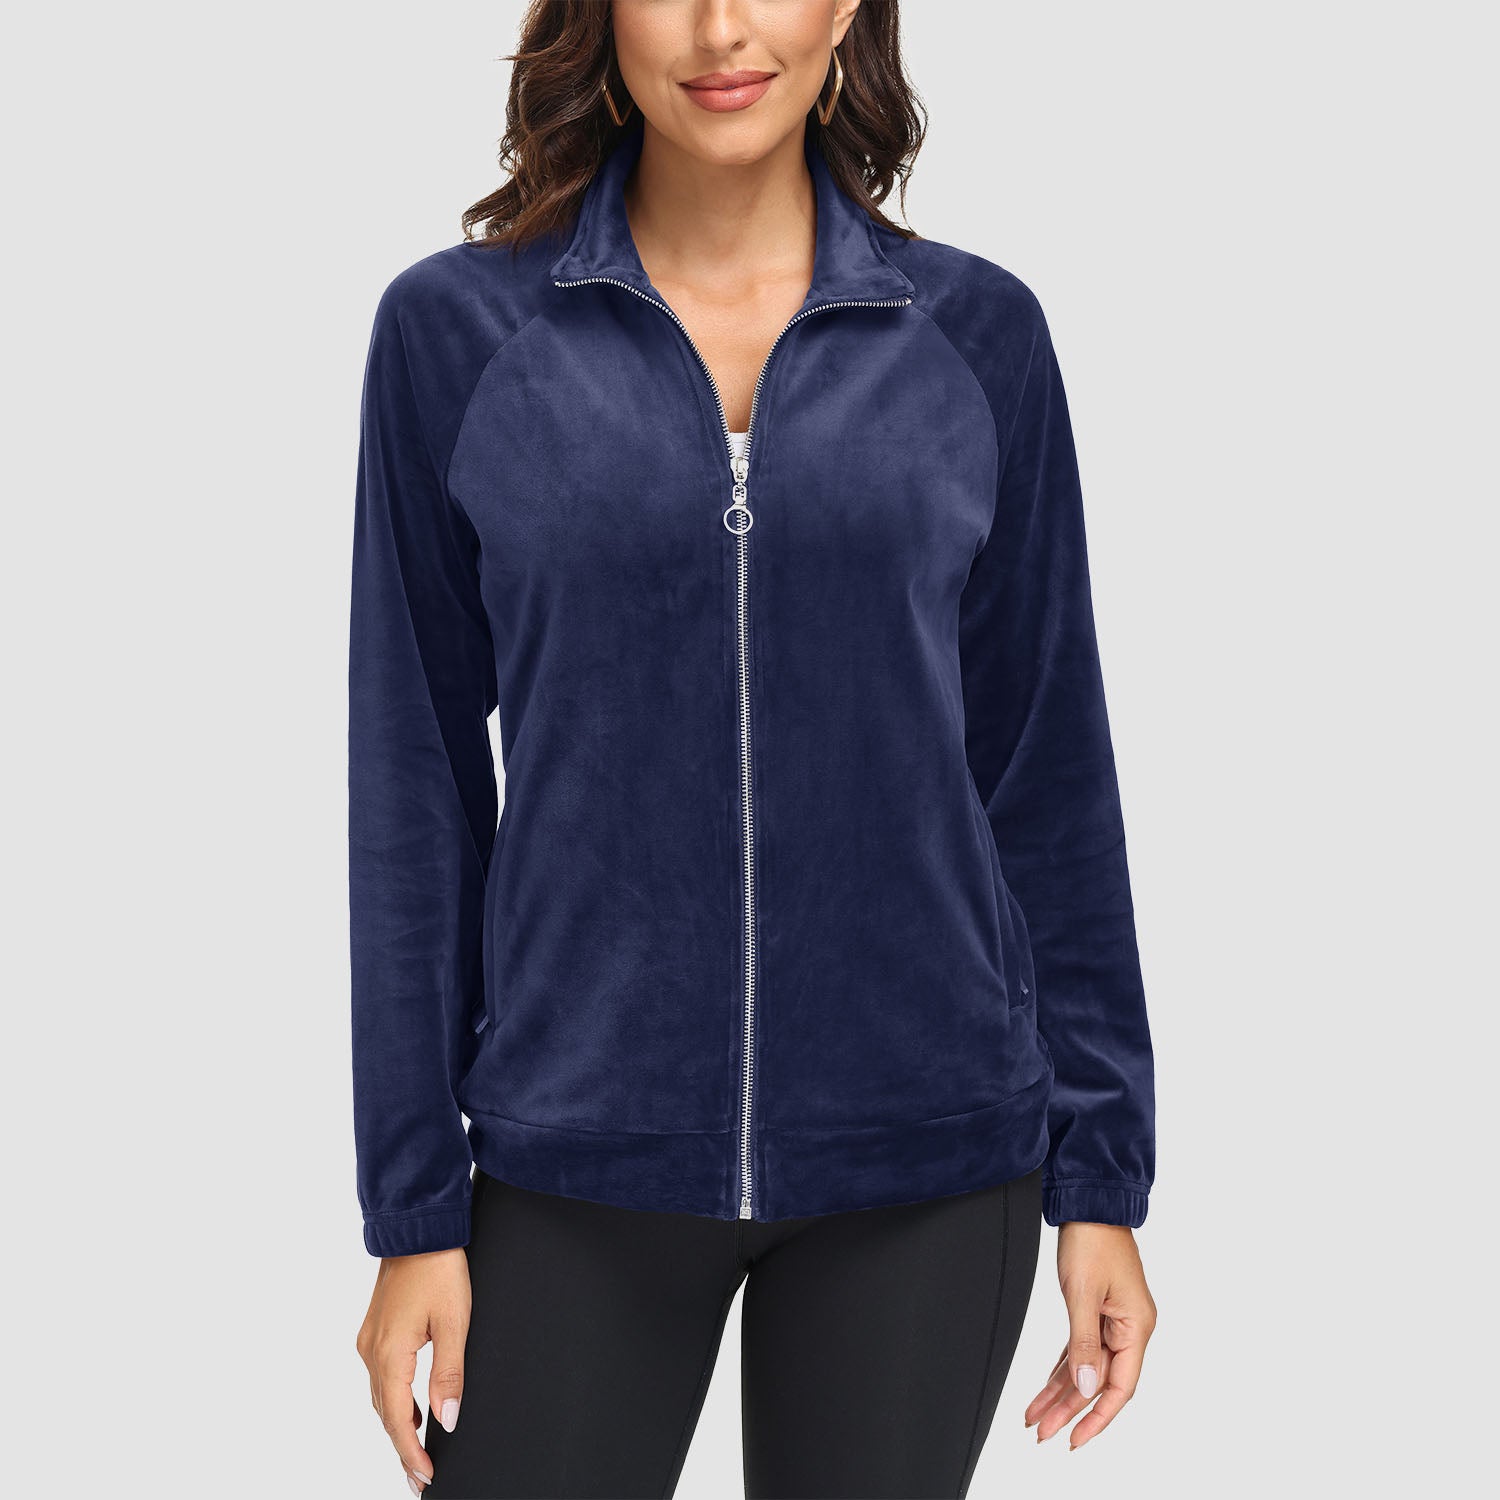 Women's Velour Jackets Full Zip Up Fleece Jacket With Zipper Pockets Soft Winter Jackets